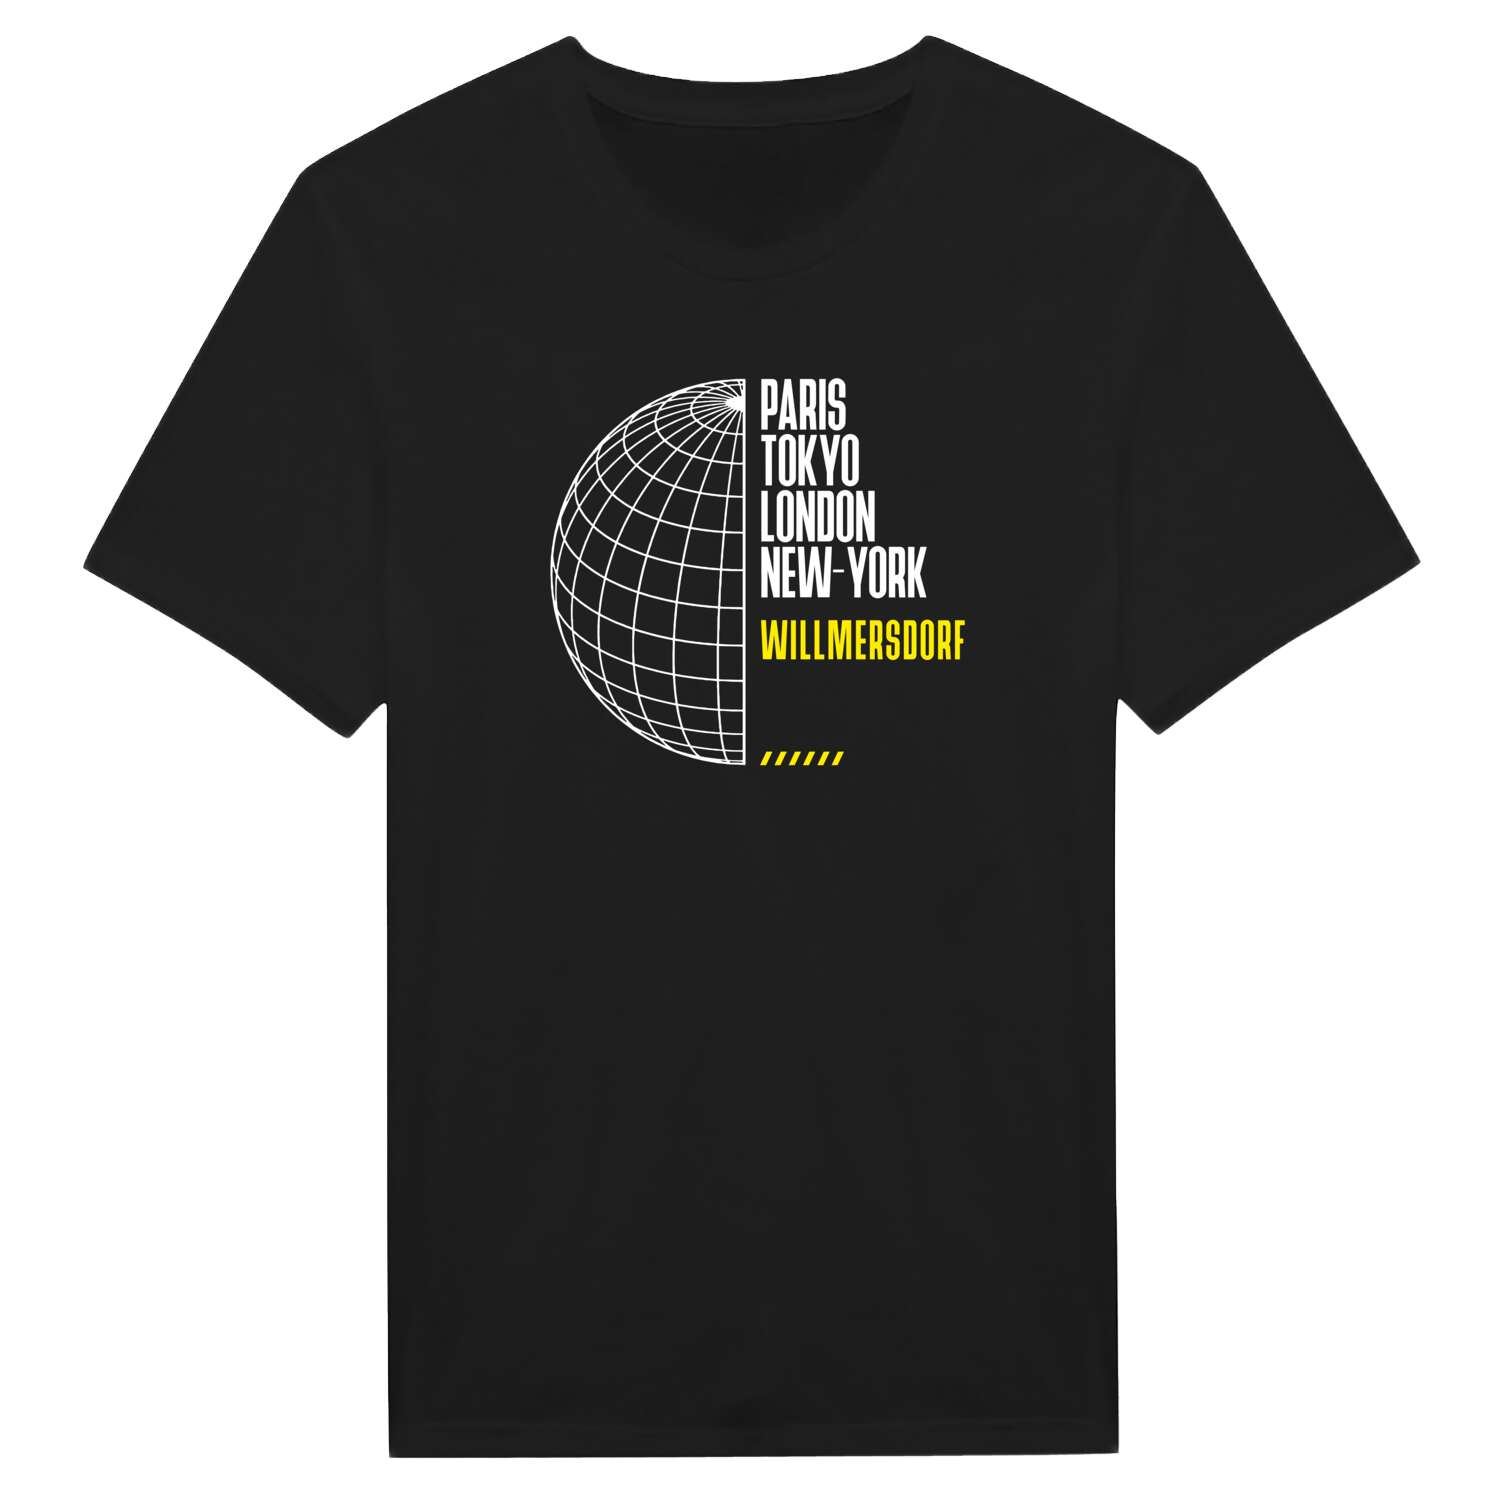 Willmersdorf T-Shirt »Paris Tokyo London«